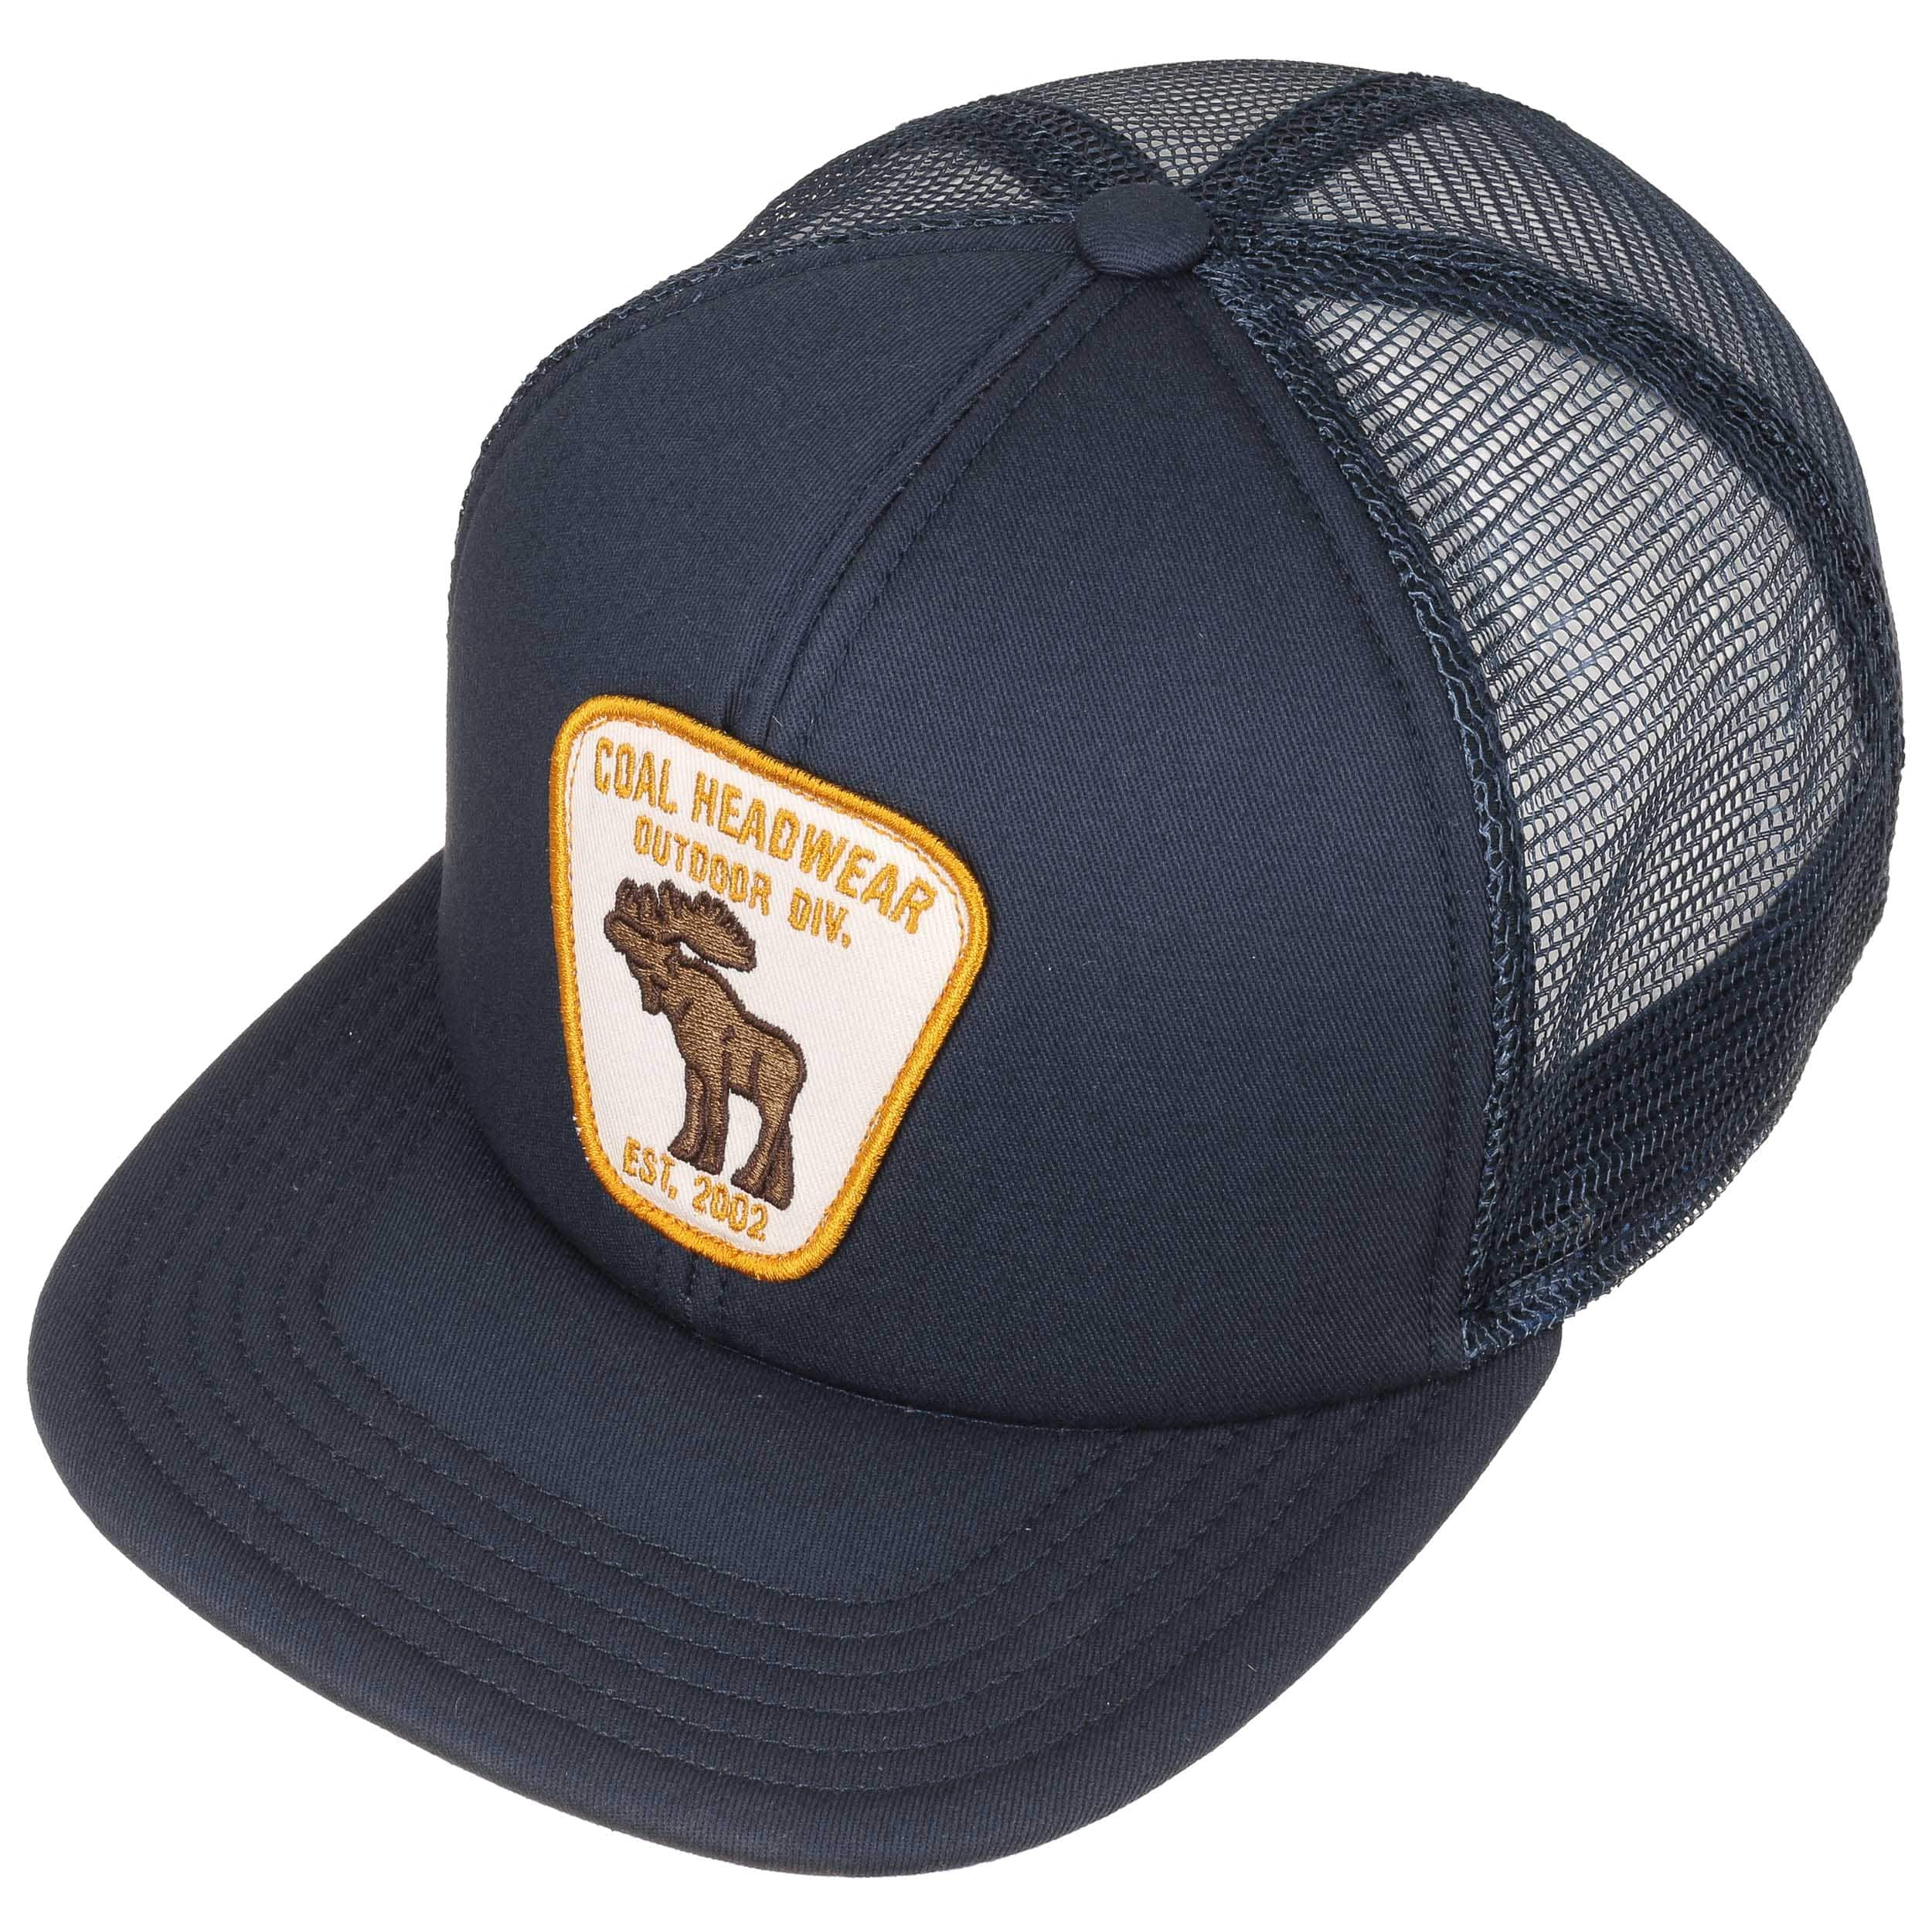 The Bureau Trucker Cap by Coal, EUR 17,95 --> Hats, caps & beanies shop ...